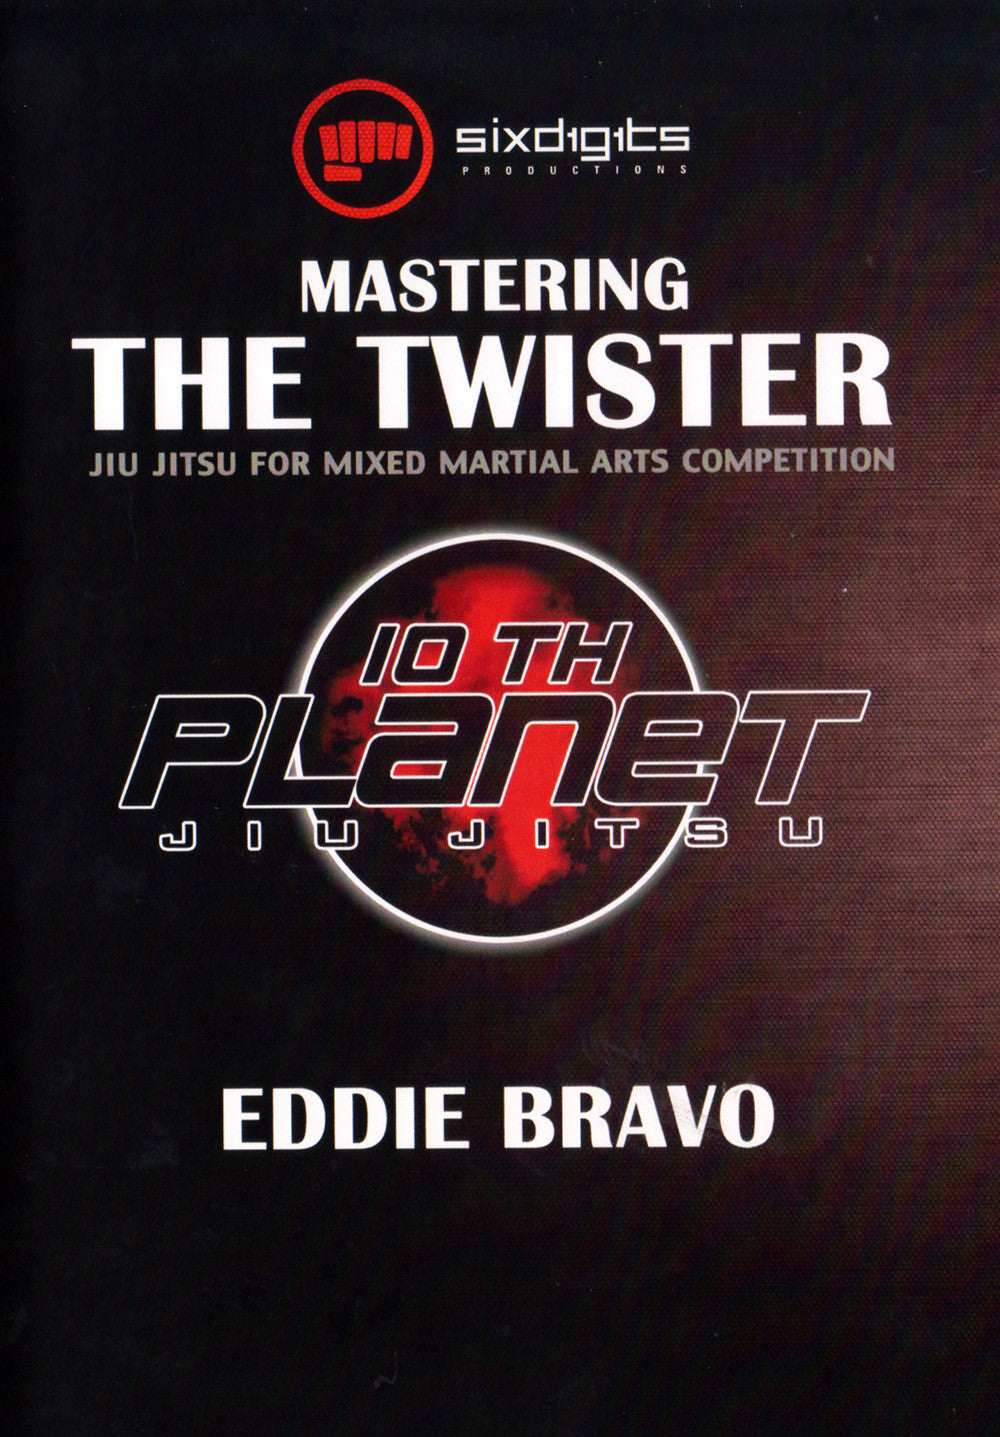 Mastering the Twister DVD by Eddie Bravo - Budovideos Inc